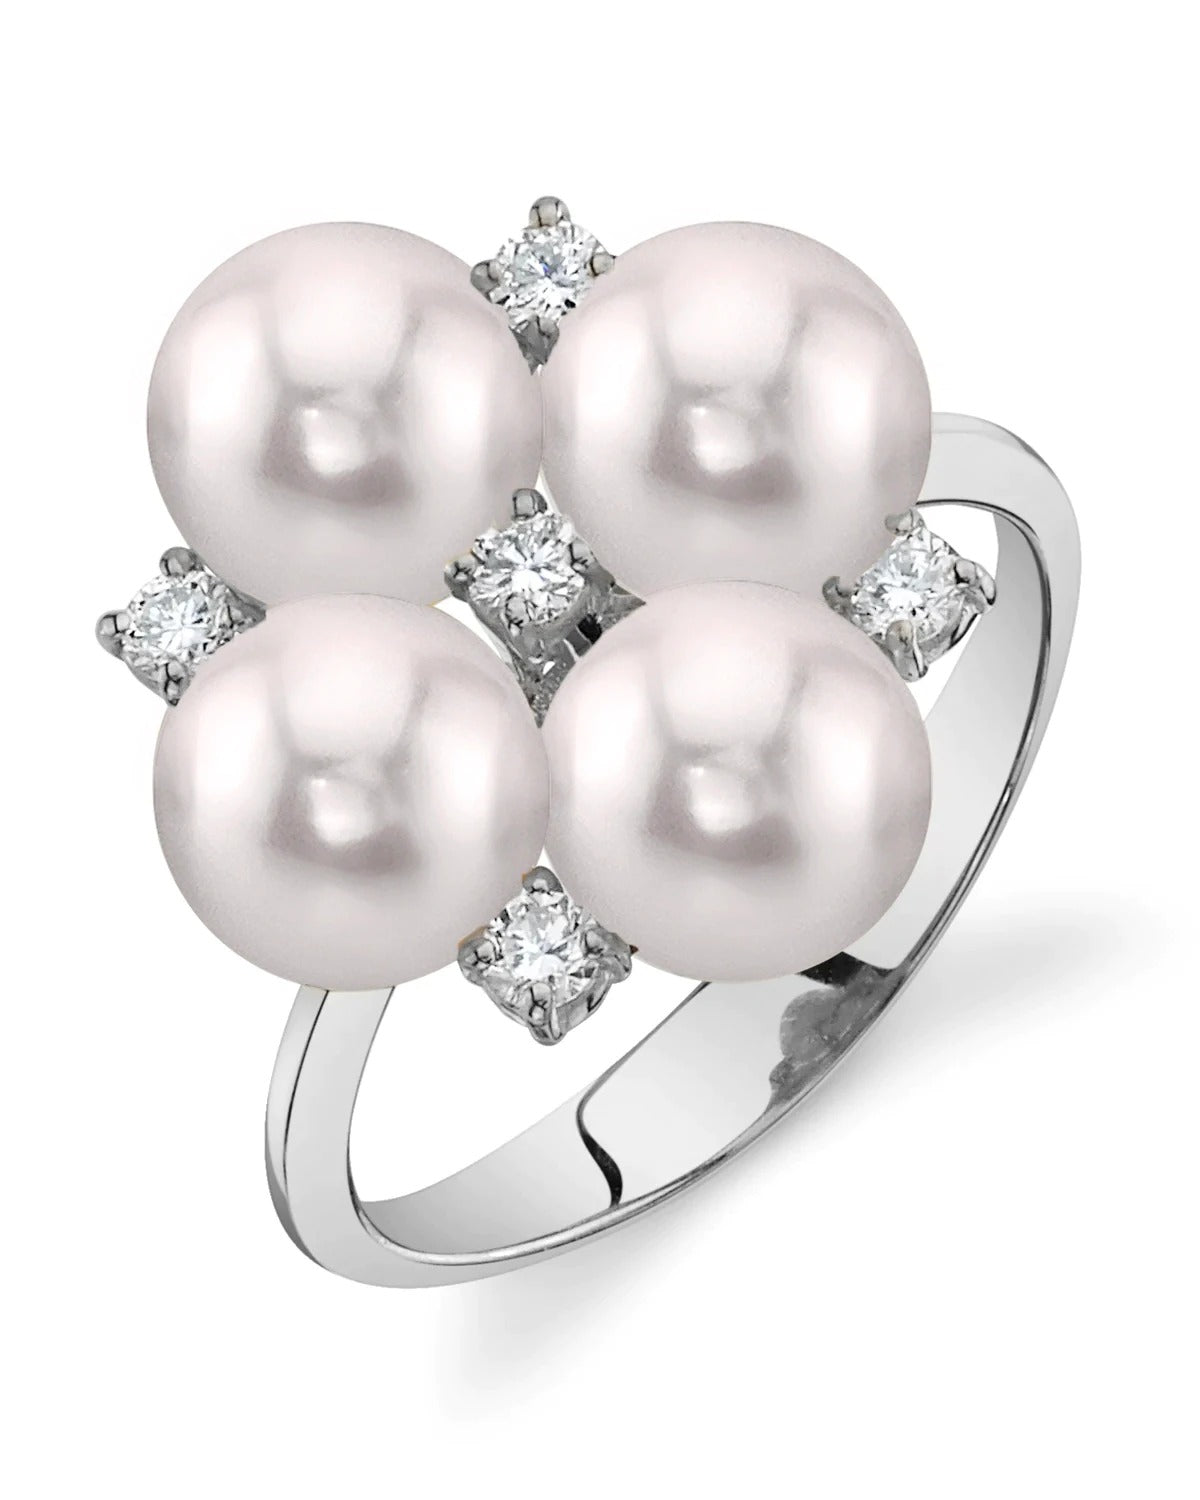 Details of Renee Akoya Diamond & Pearl Engagement Ring